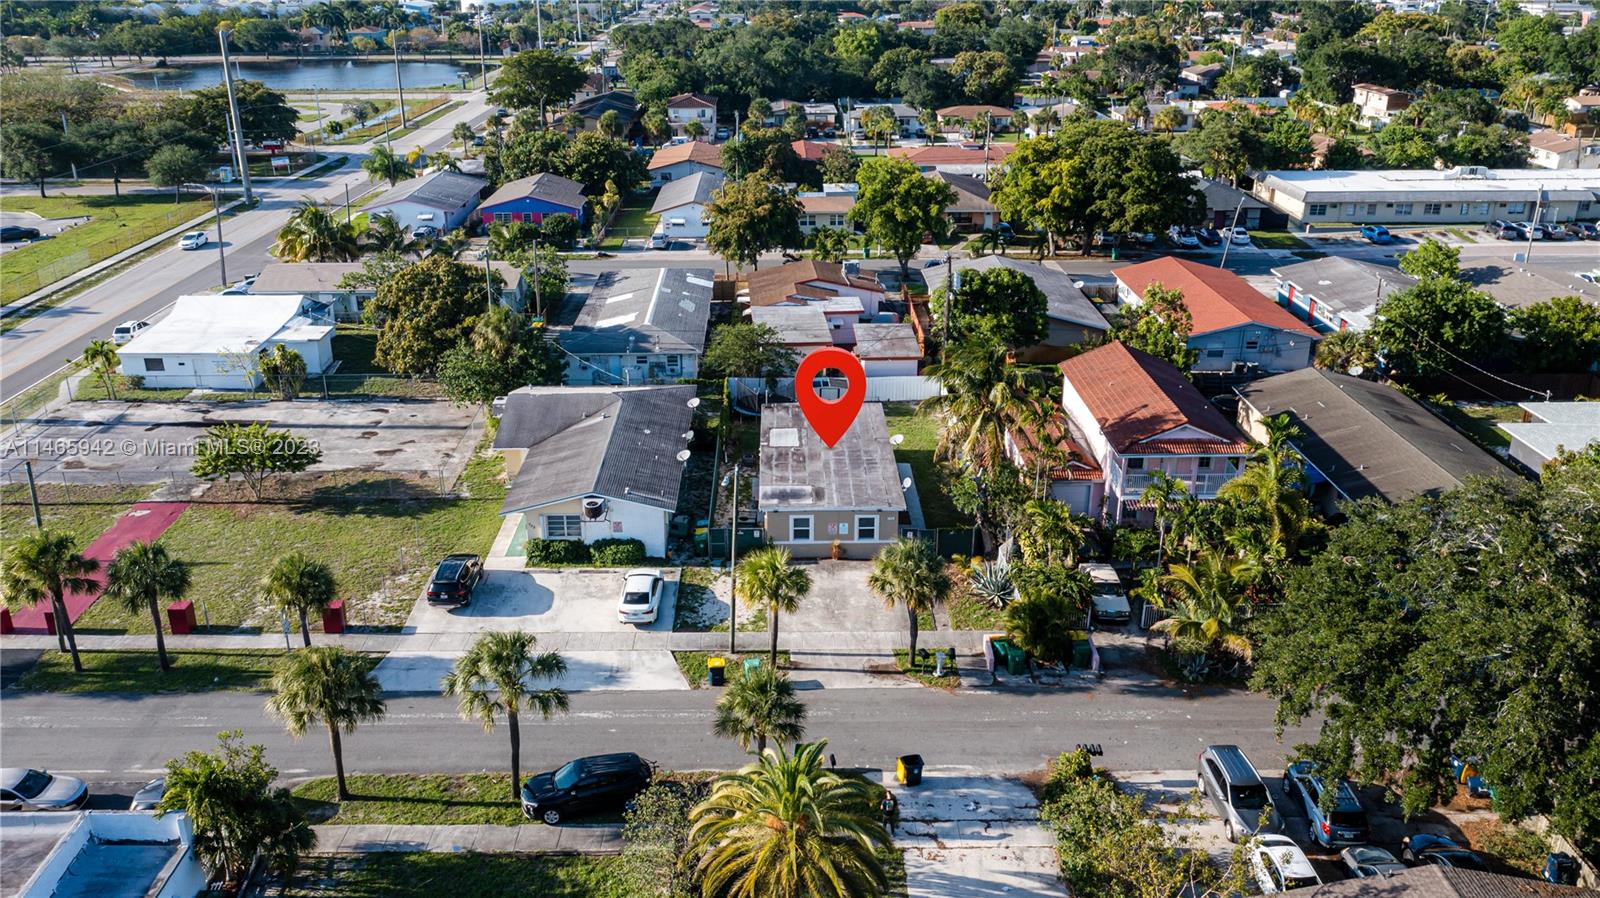 Rental Property at 728 Sw 6th St, Dania Beach, Miami-Dade County, Florida -  - $450,000 MO.